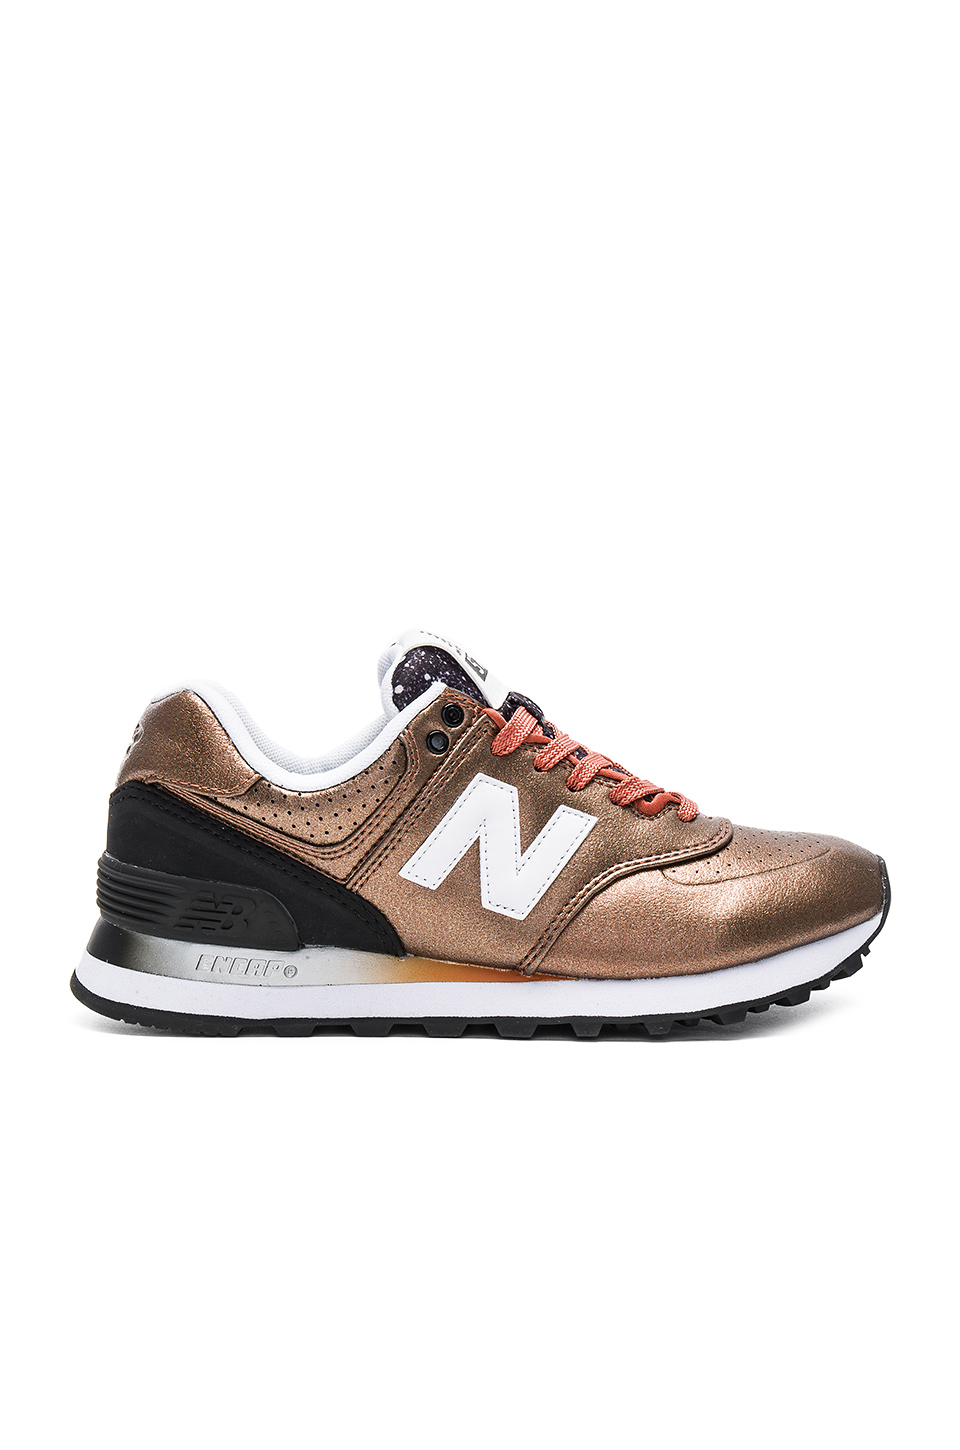 New Balance 574 Gradient Sneaker In Copper & Black | ModeSens